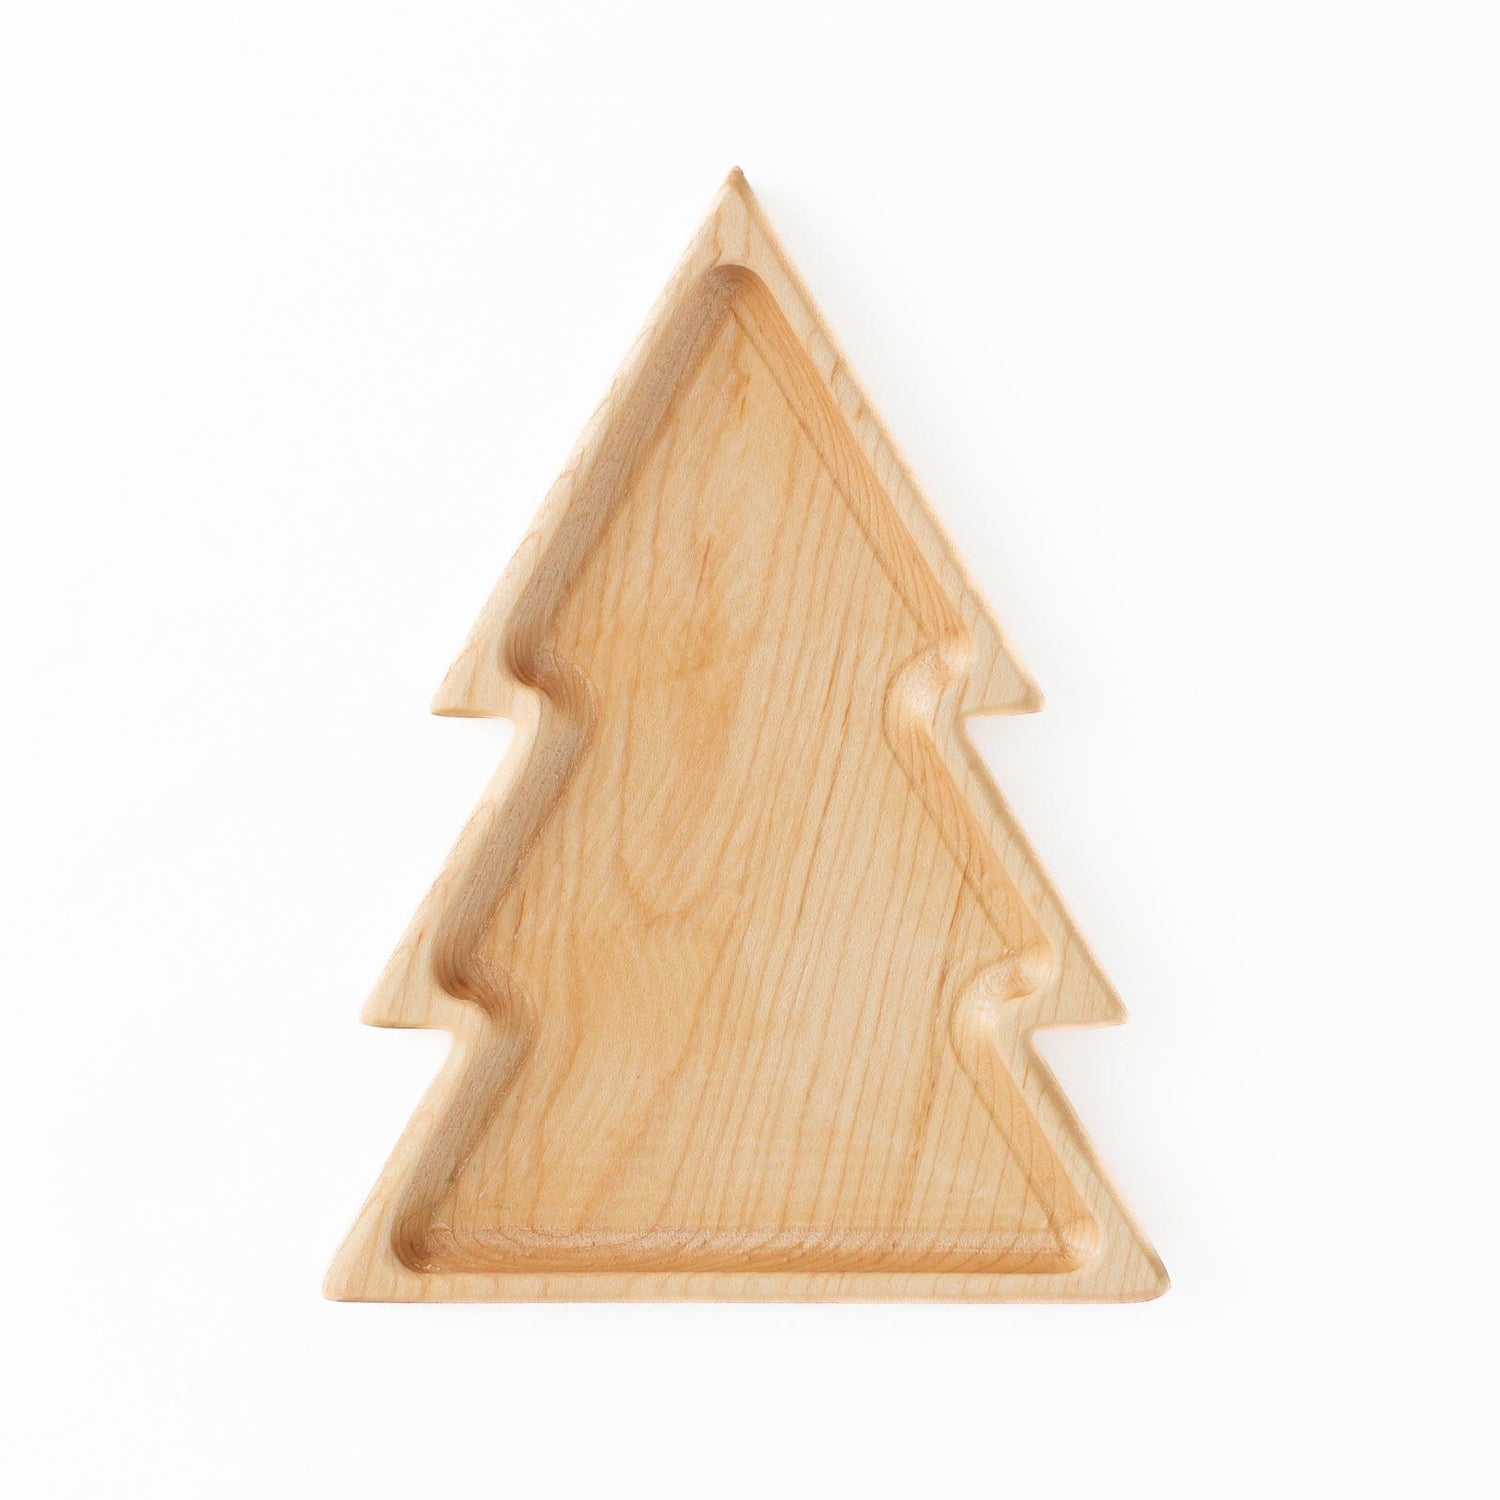 Aw & Co. Sensory Play Wooden Tree Plate / Sensory Tray (Made in Canada)